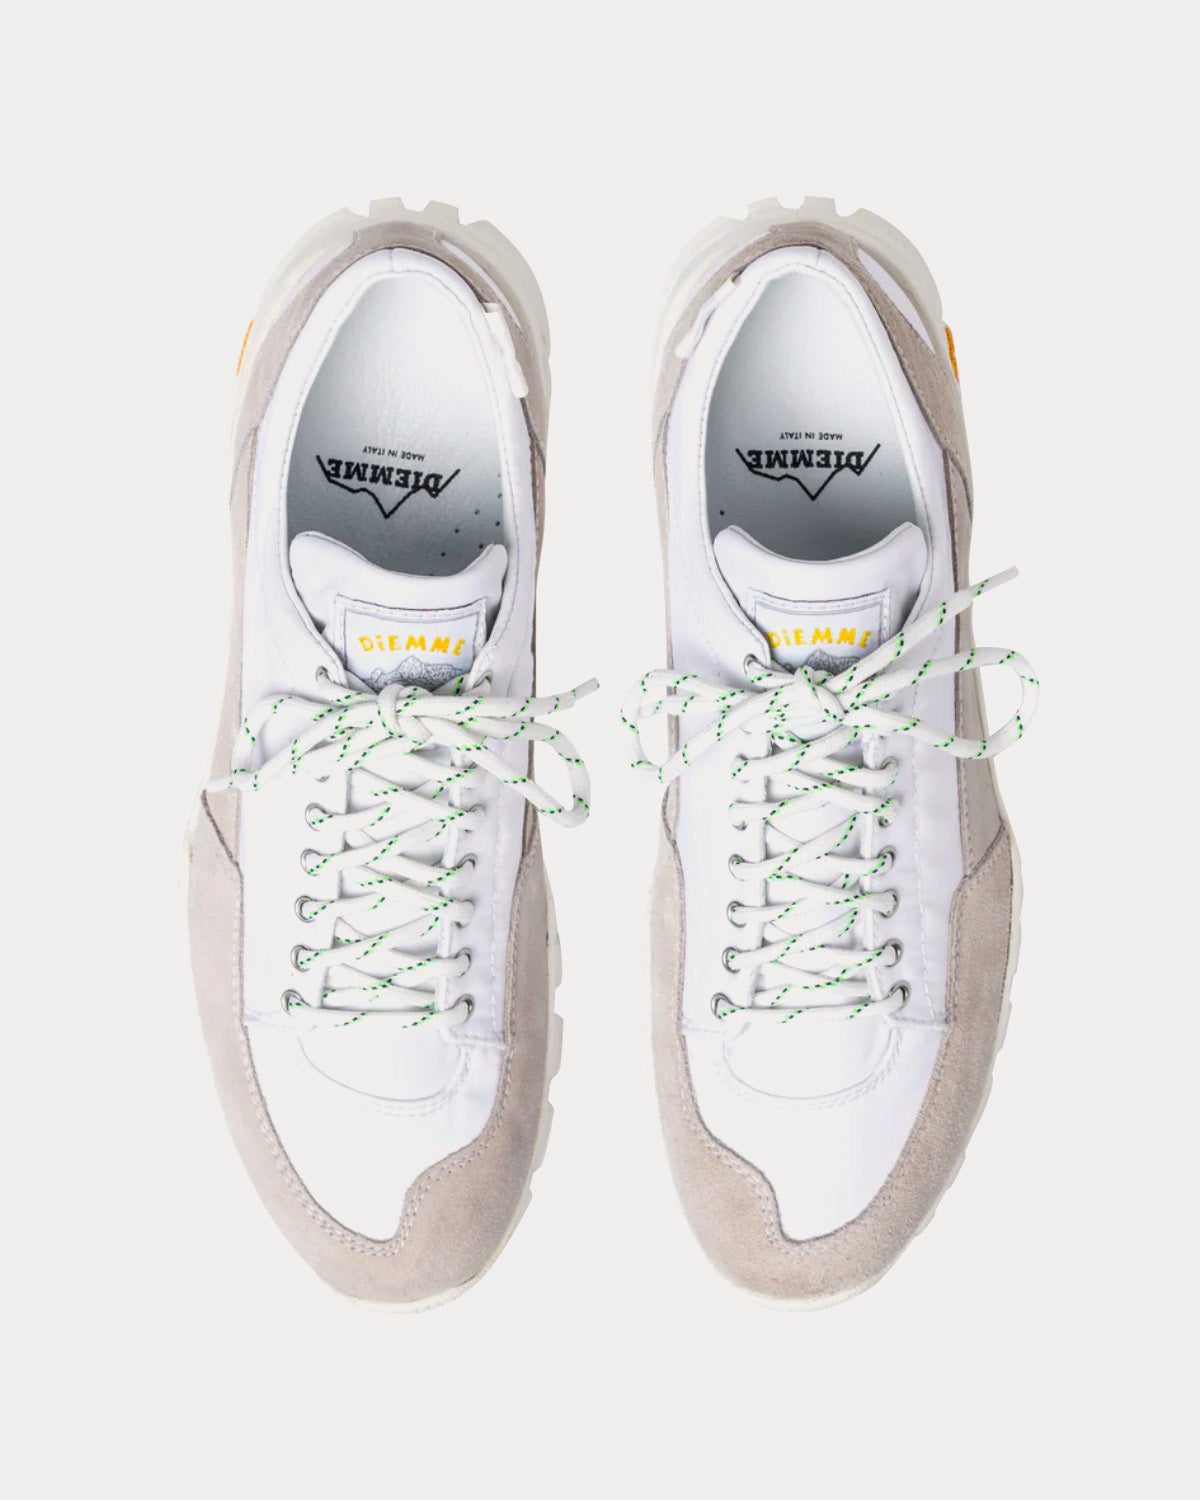 Diemme - Possagno Bomber White Low Top Sneakers